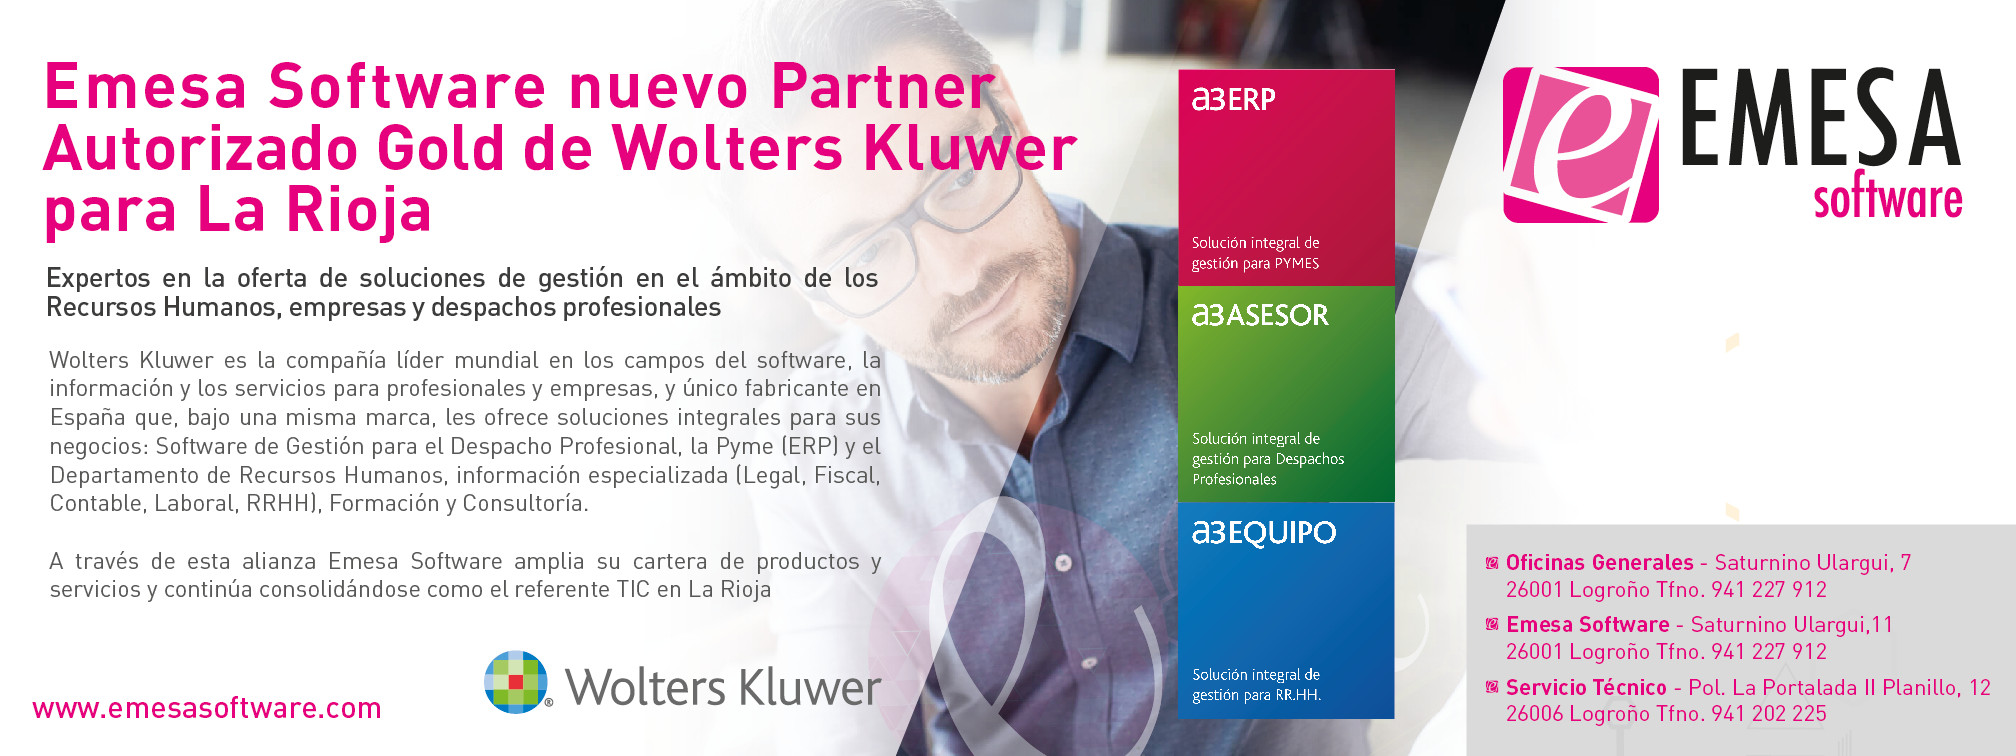 Emesa Software nuevo Partner Wolters Kluwer